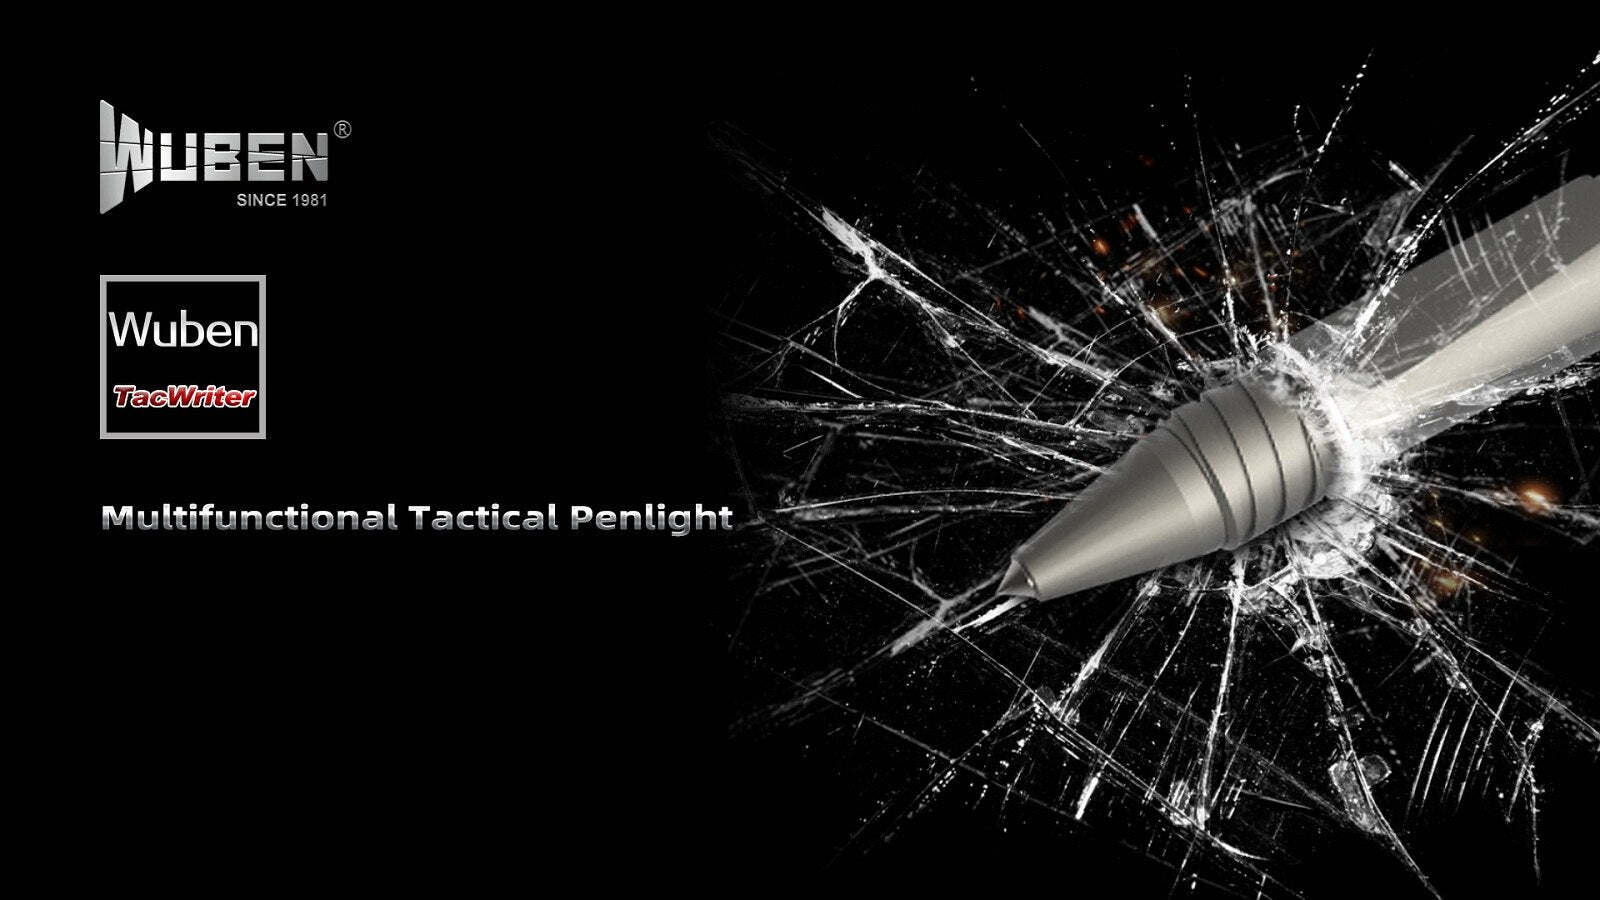 Wuben TP10  XP-G3 LED 130 Lumens Rechargeable EDC Penlight